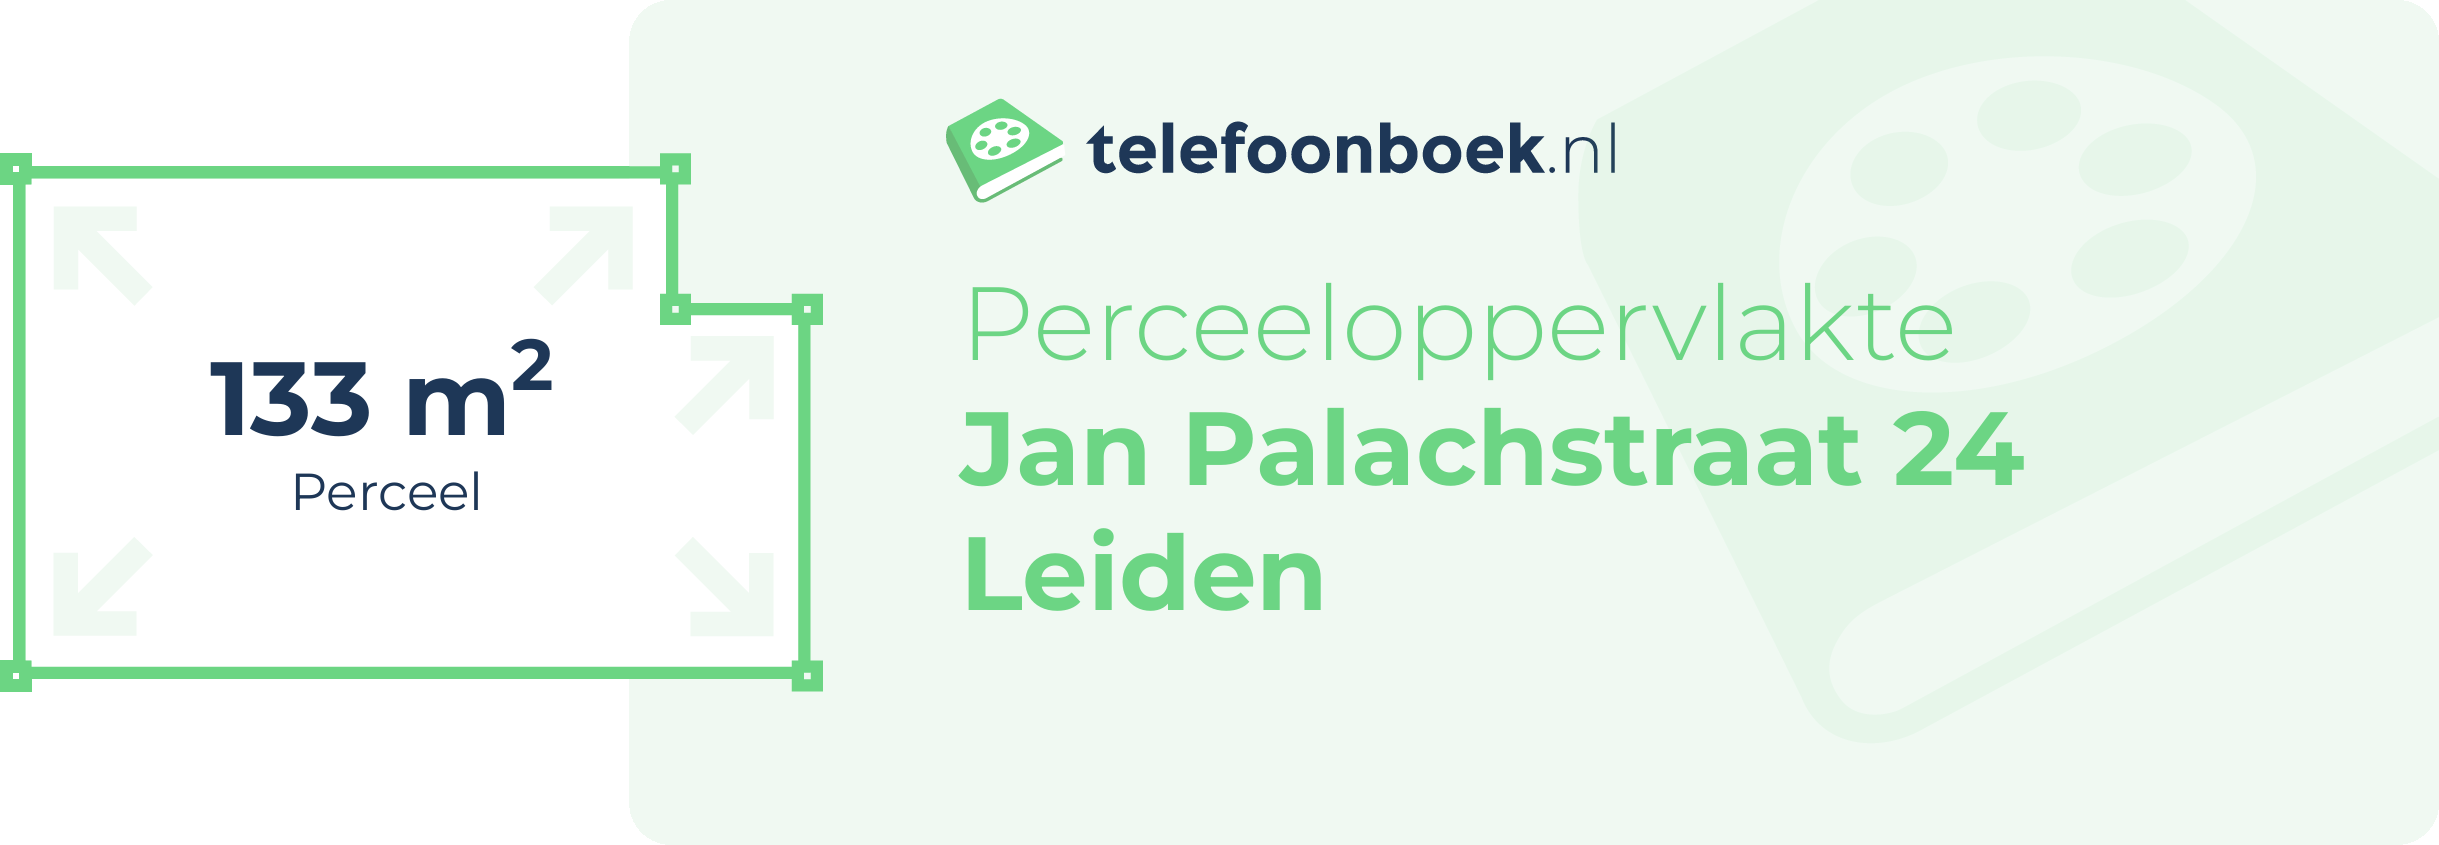 Perceeloppervlakte Jan Palachstraat 24 Leiden